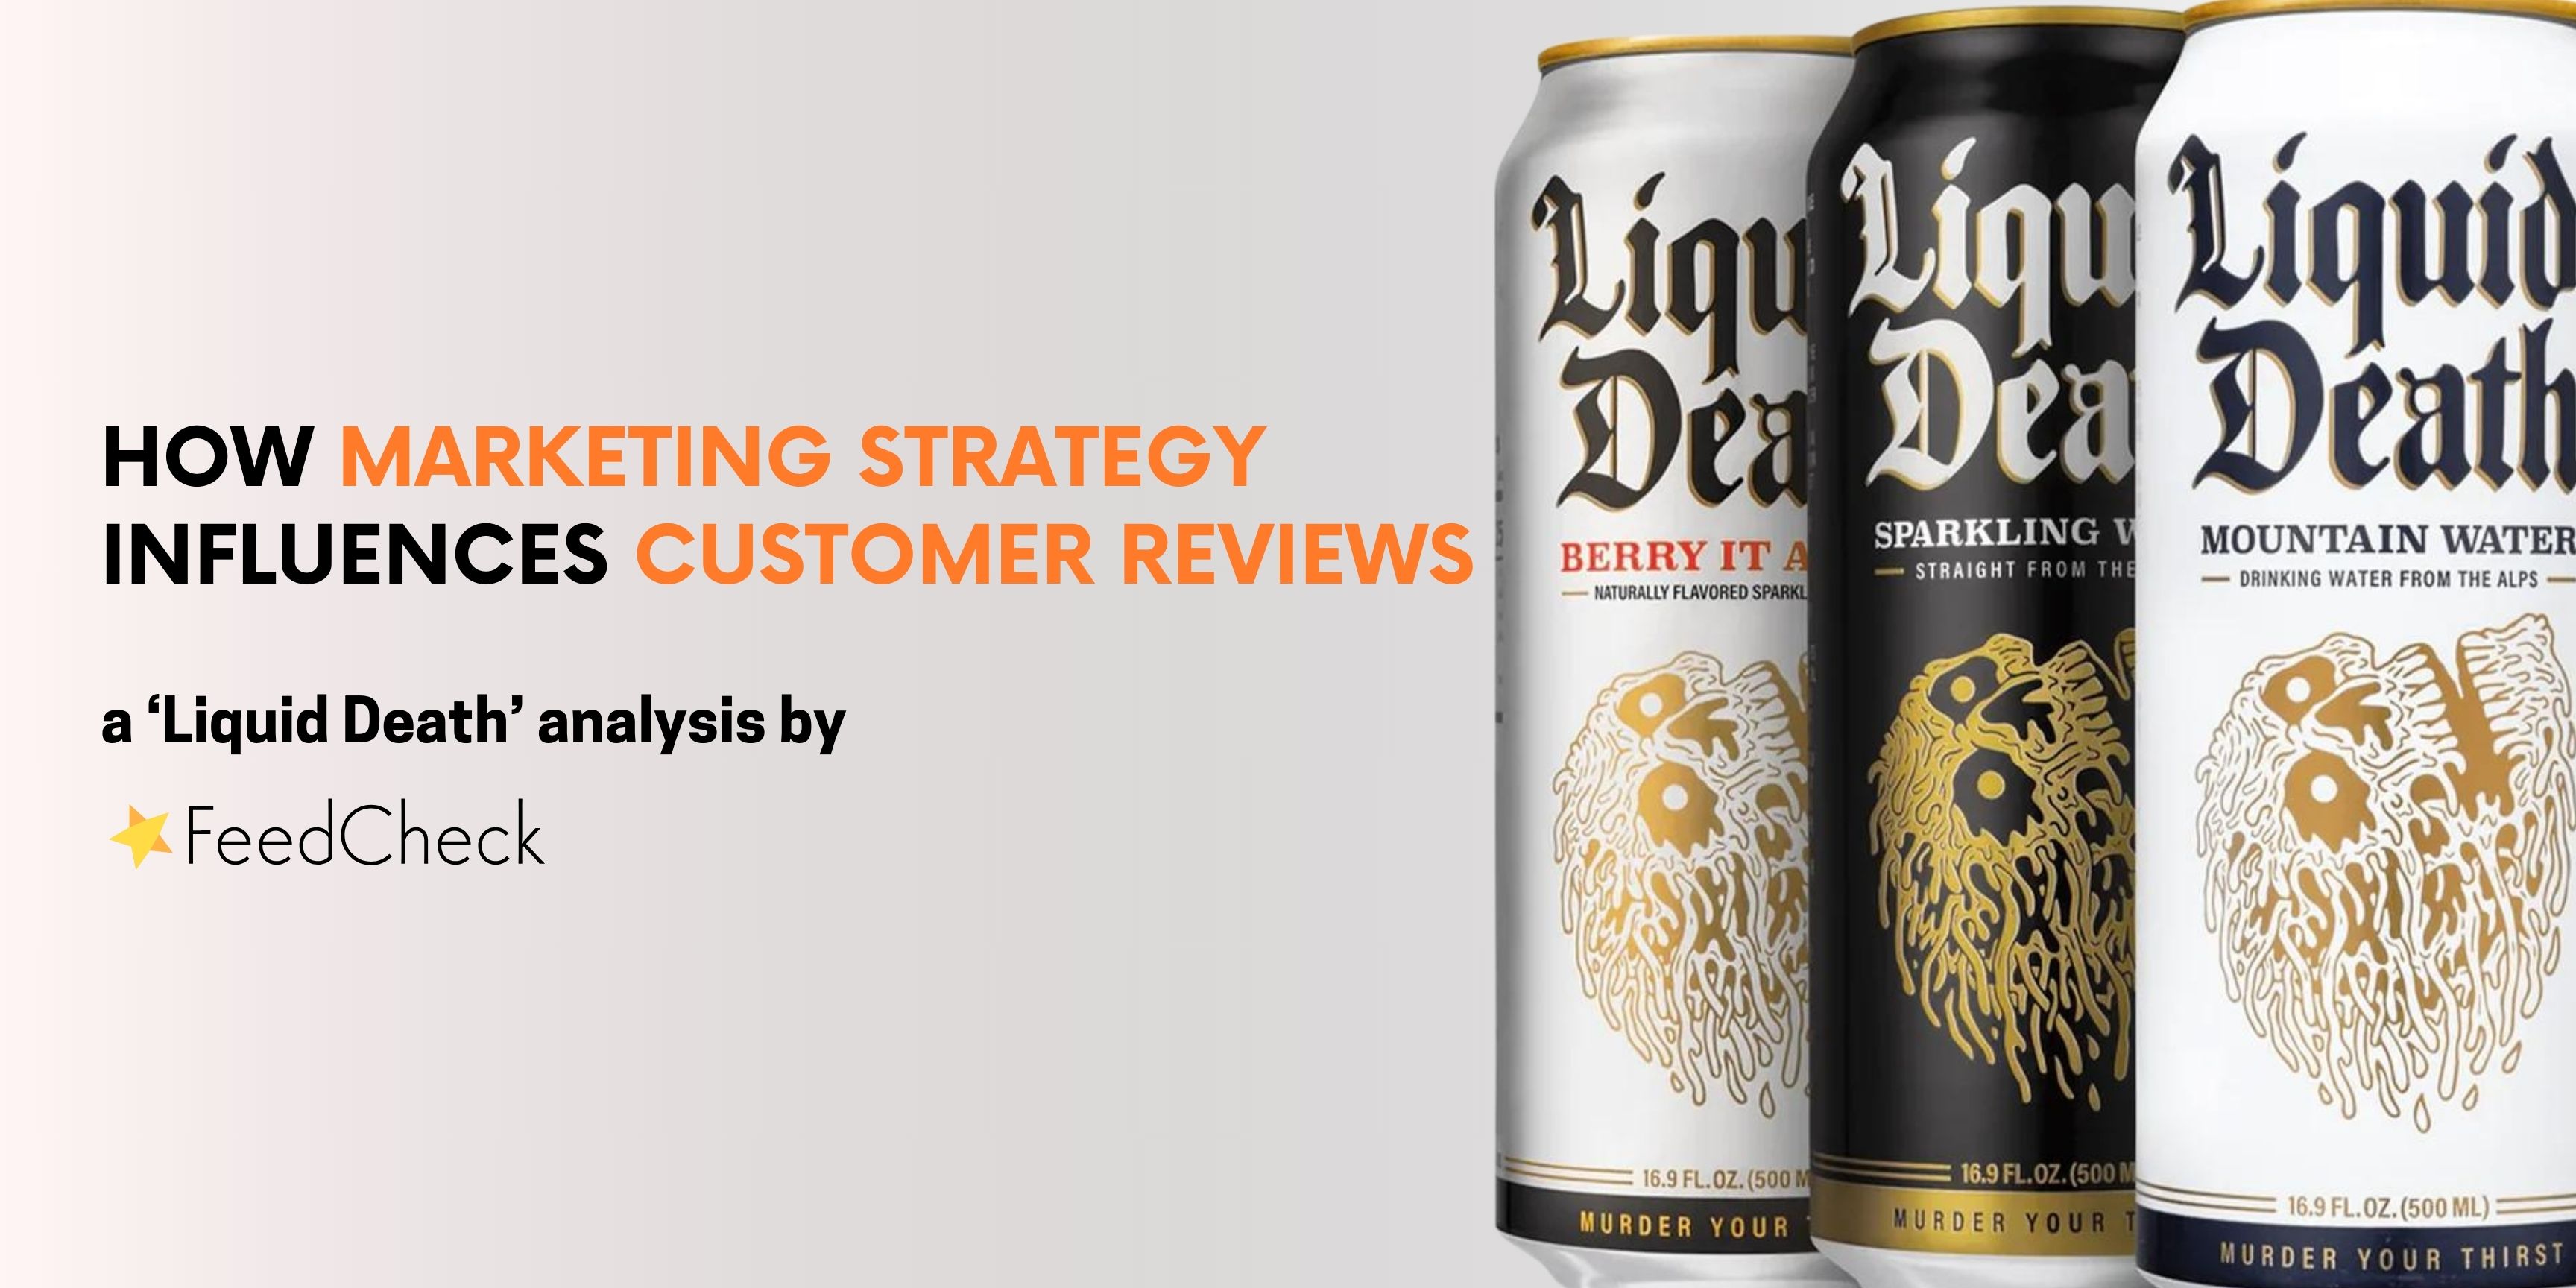 How marketing strategy influences customer reviews: ‘Liquid Death’ analysis